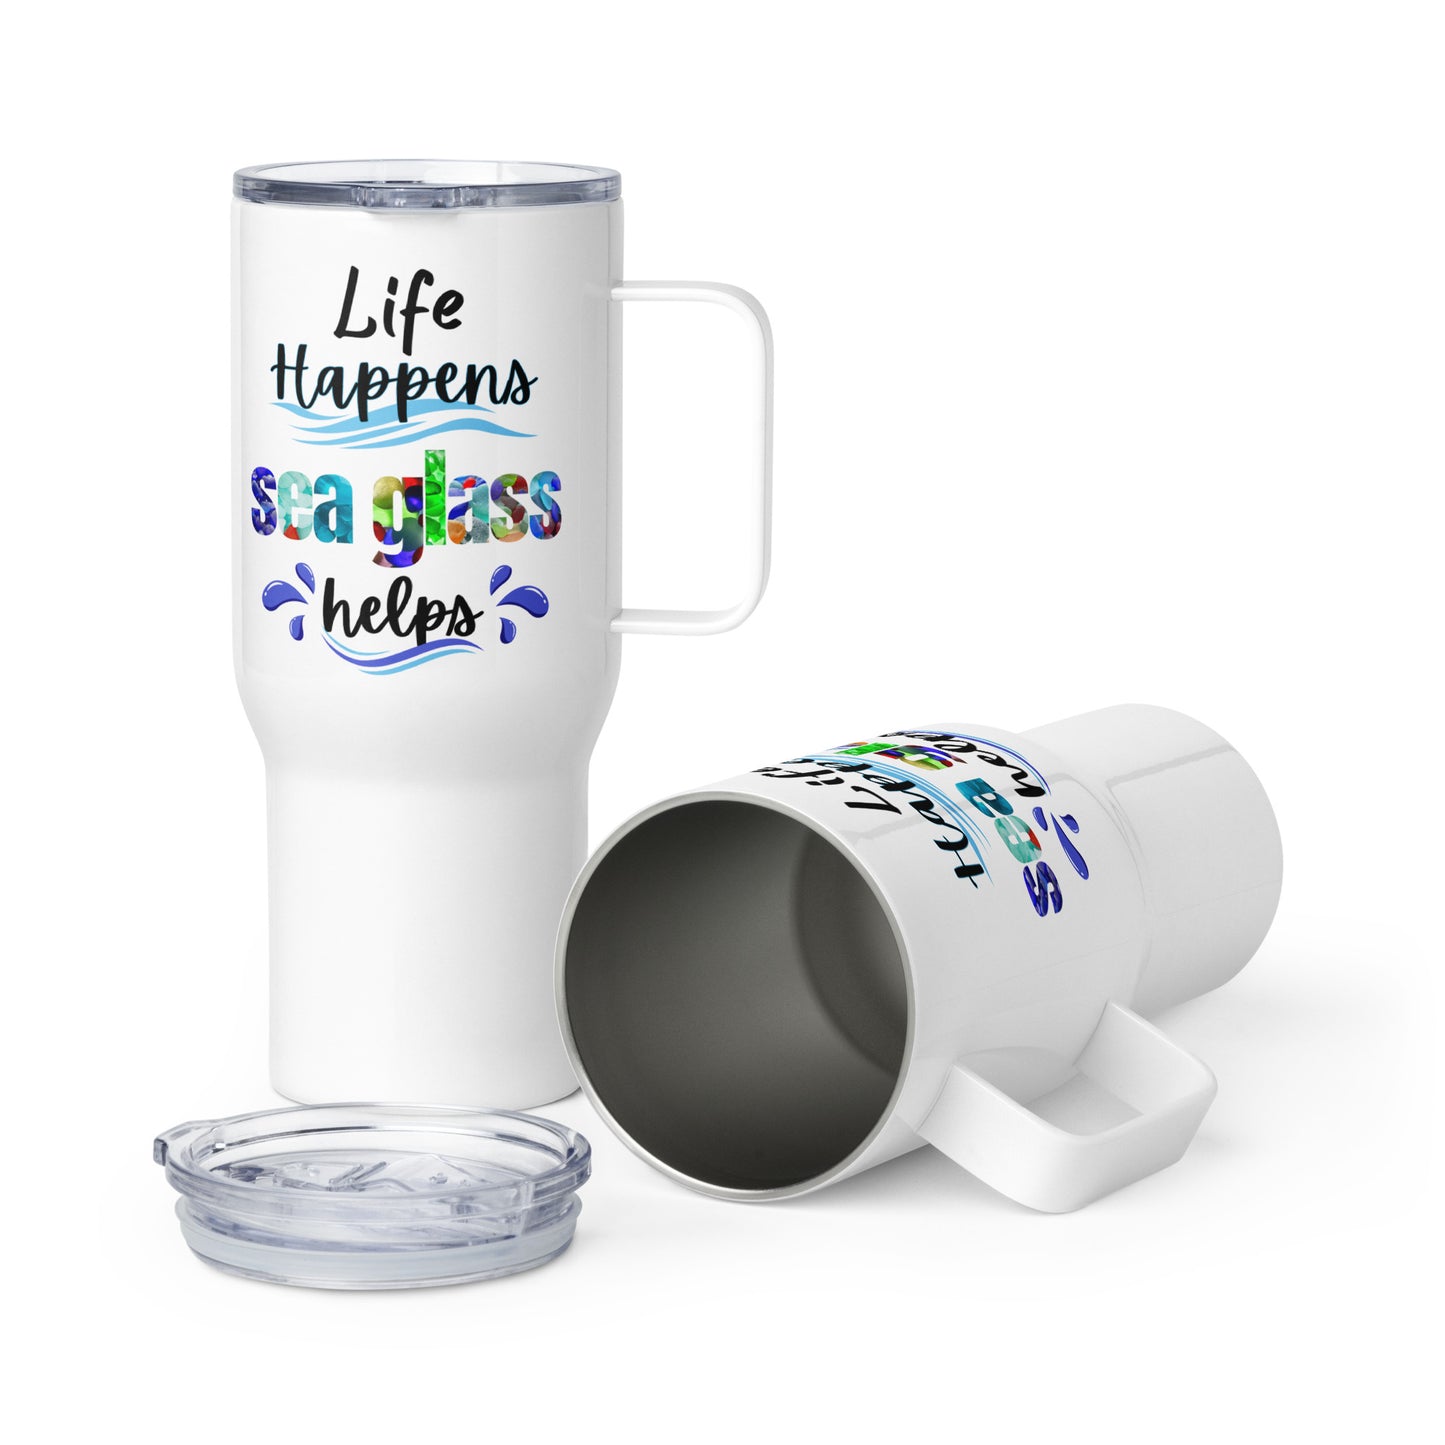 Travel Mug with a Handle - Life Happens, Sea Glass Helps